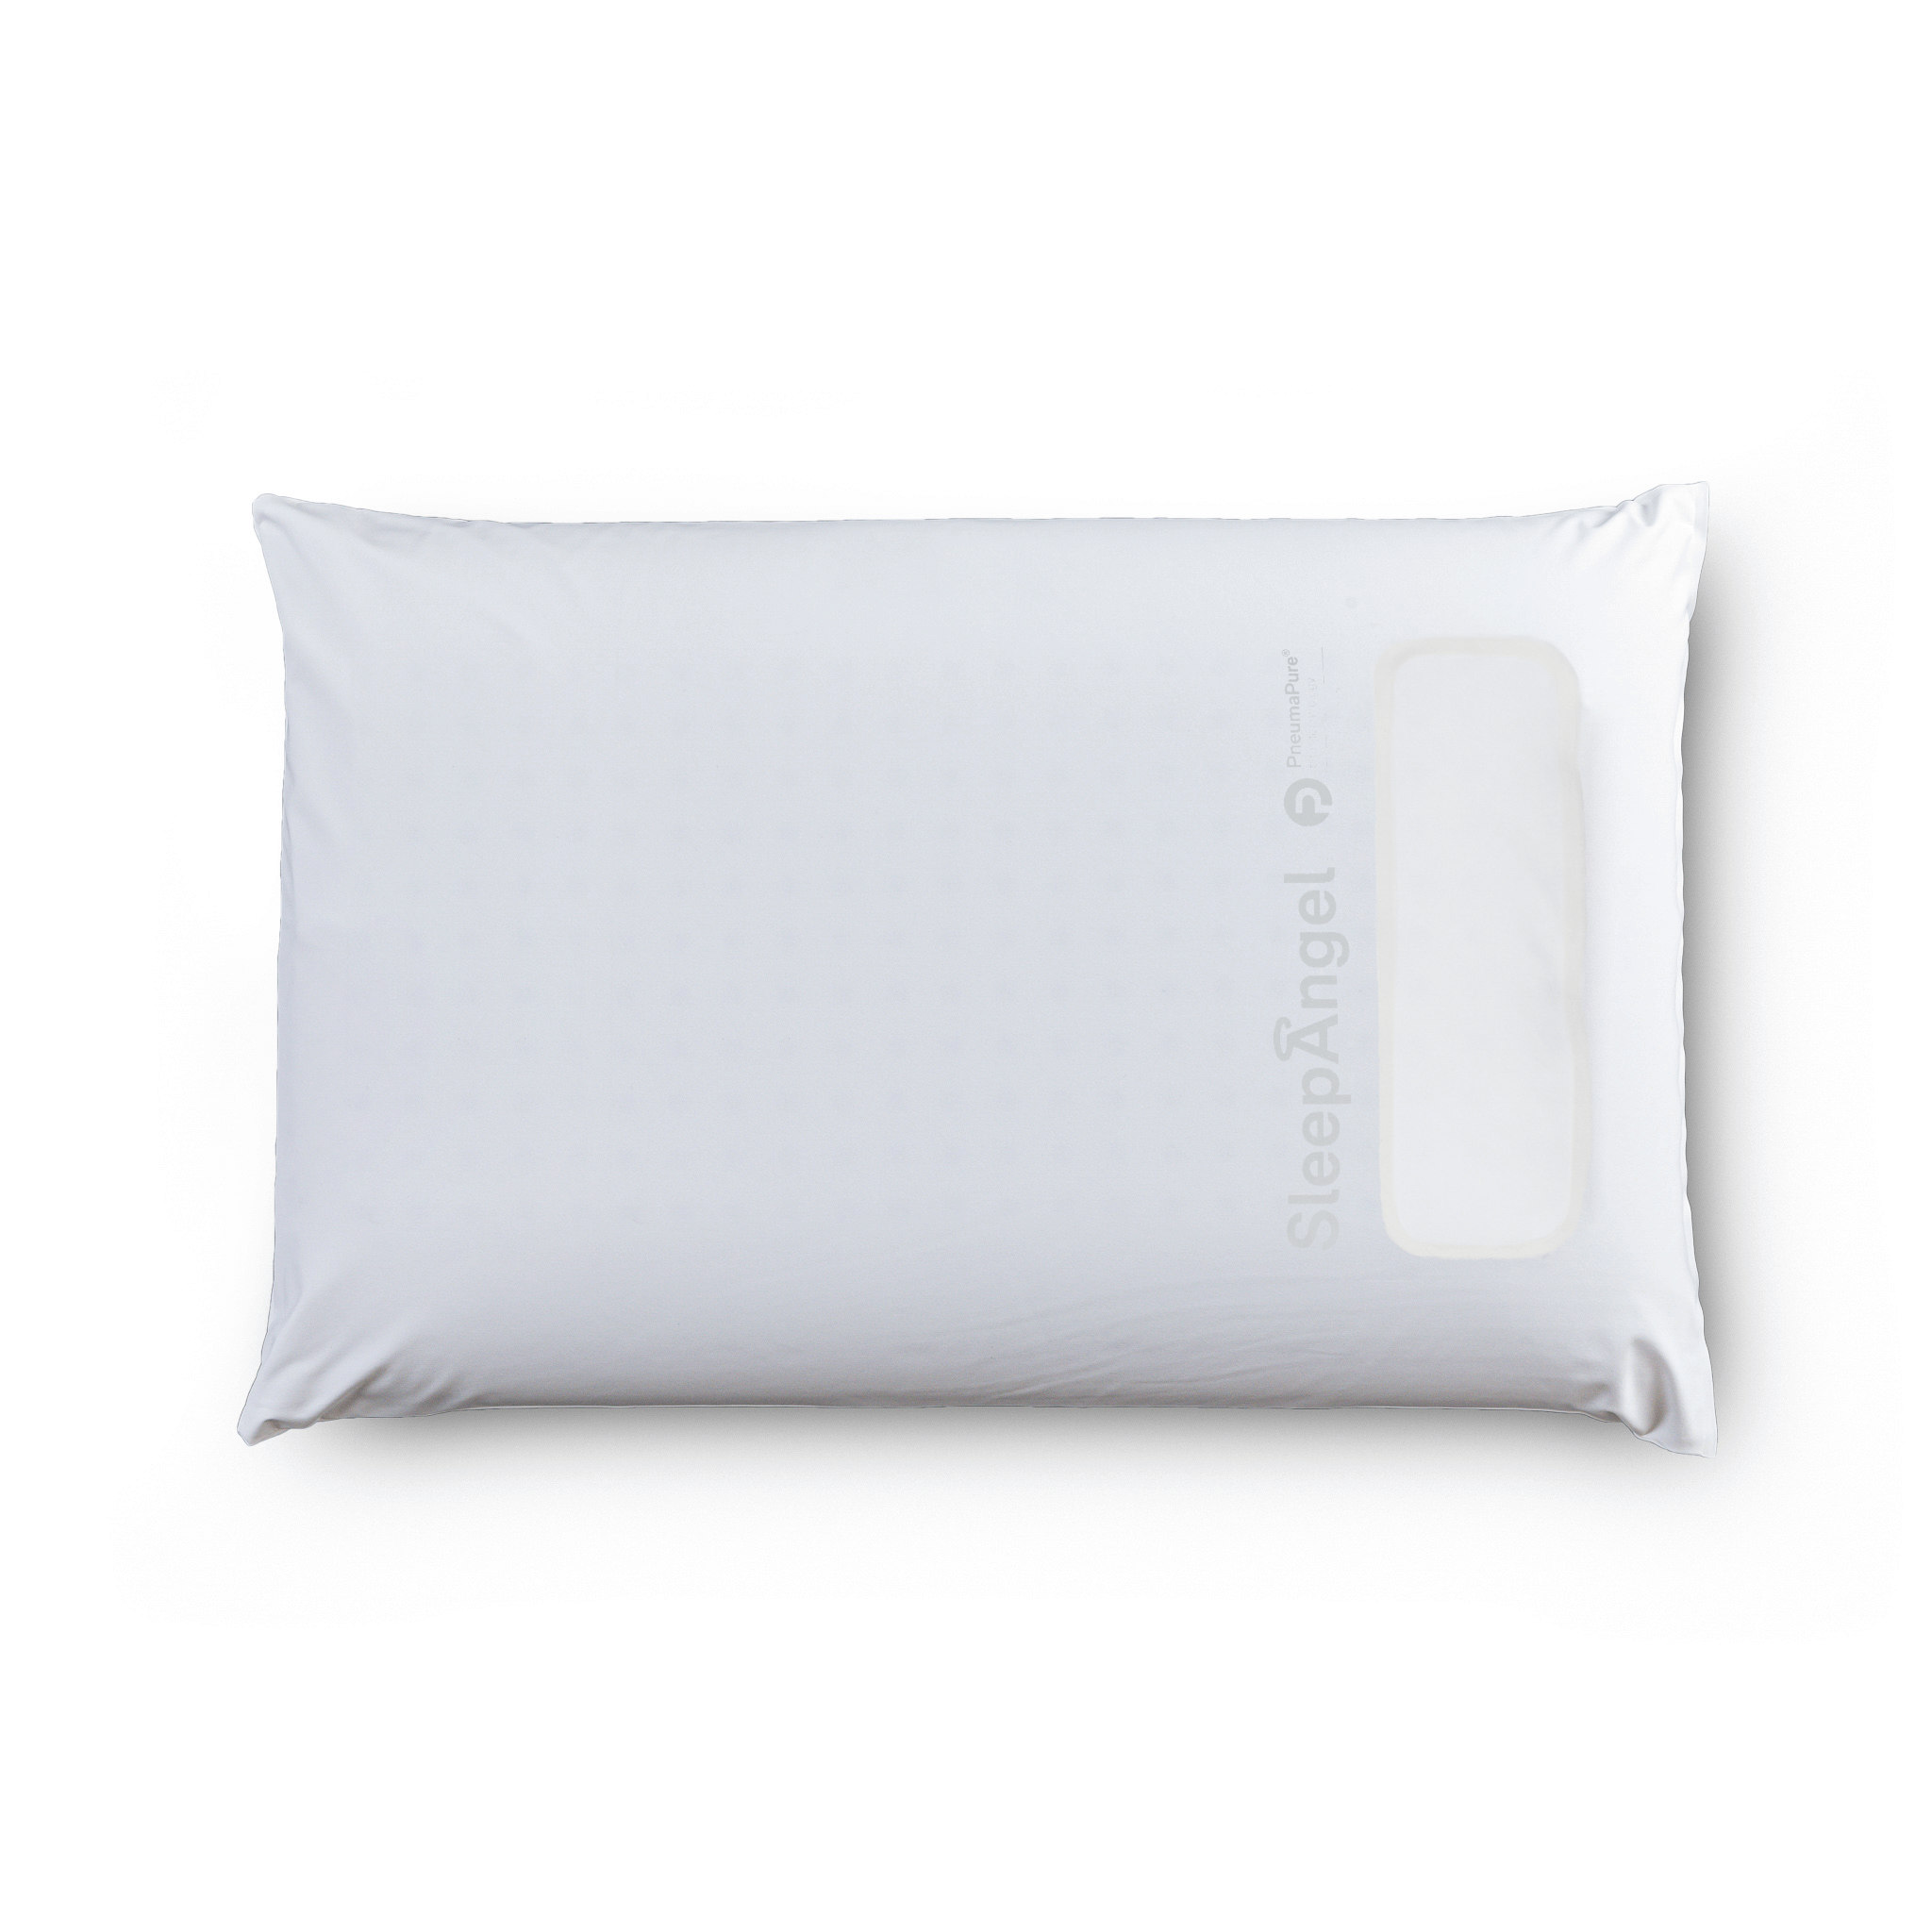 Sleepangel Memory Foam Pillow With Pneumapure Filter Antibacterial